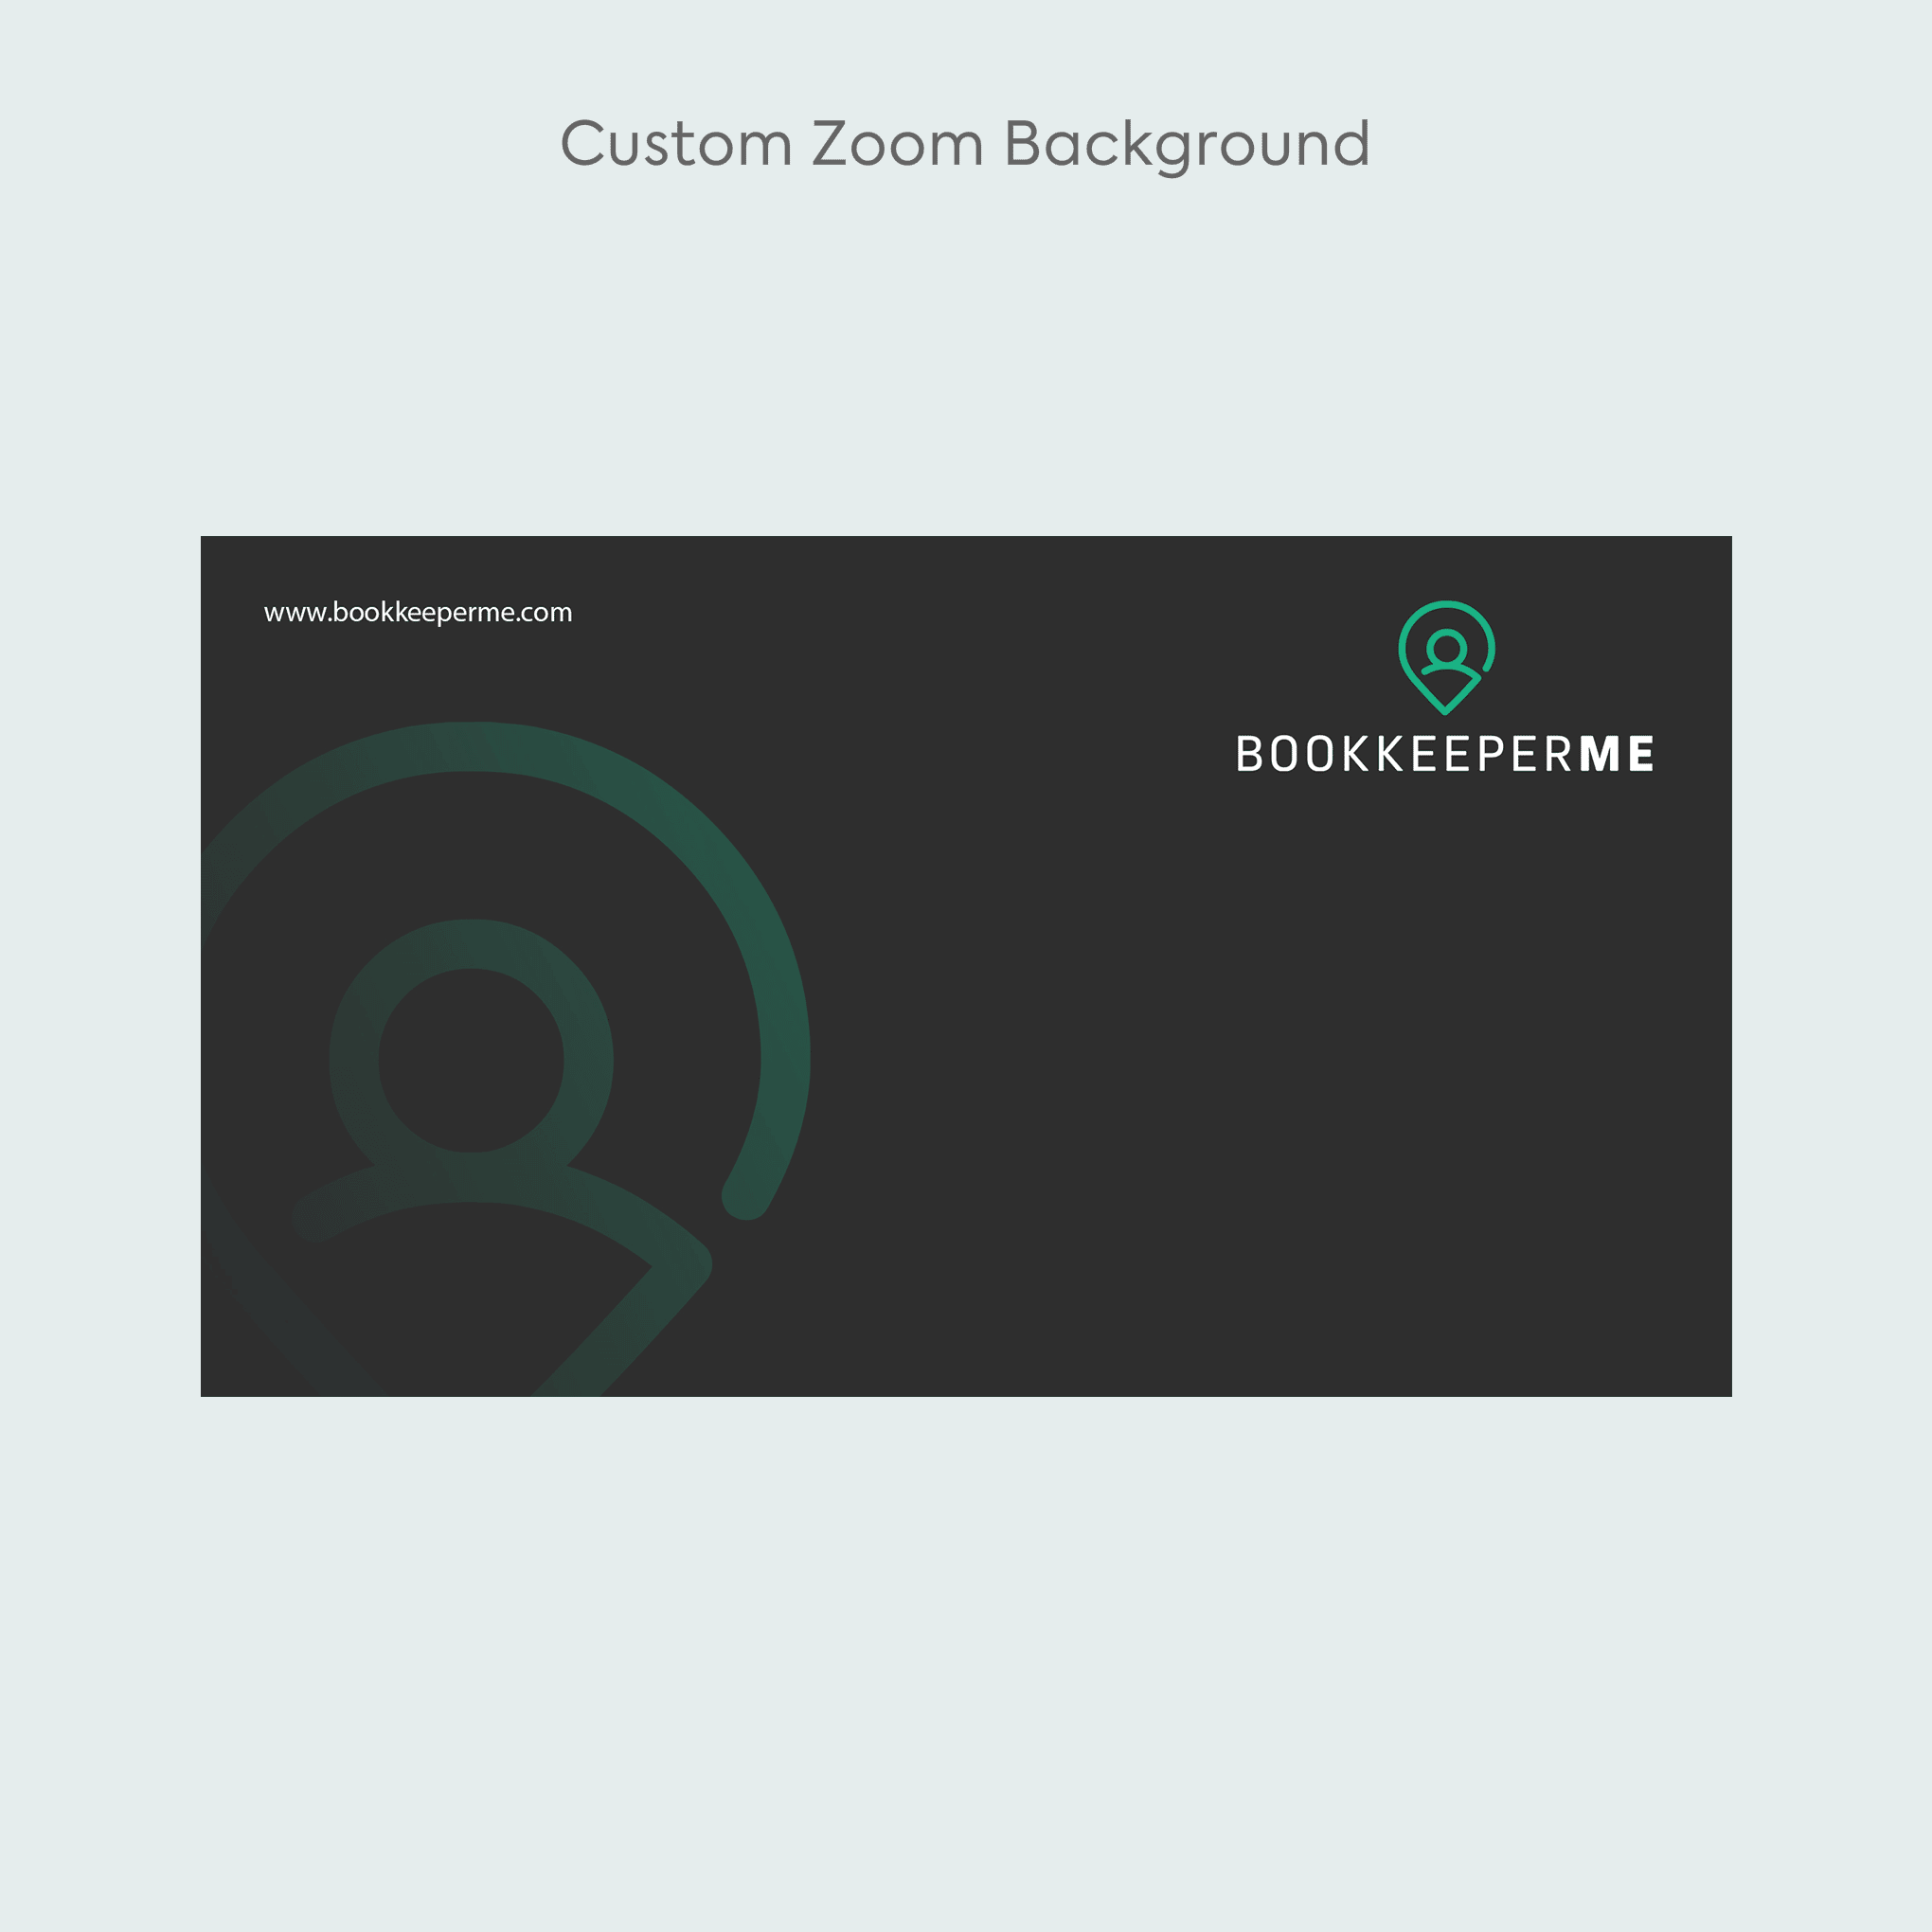 07 - Custom Zoom Background (2)